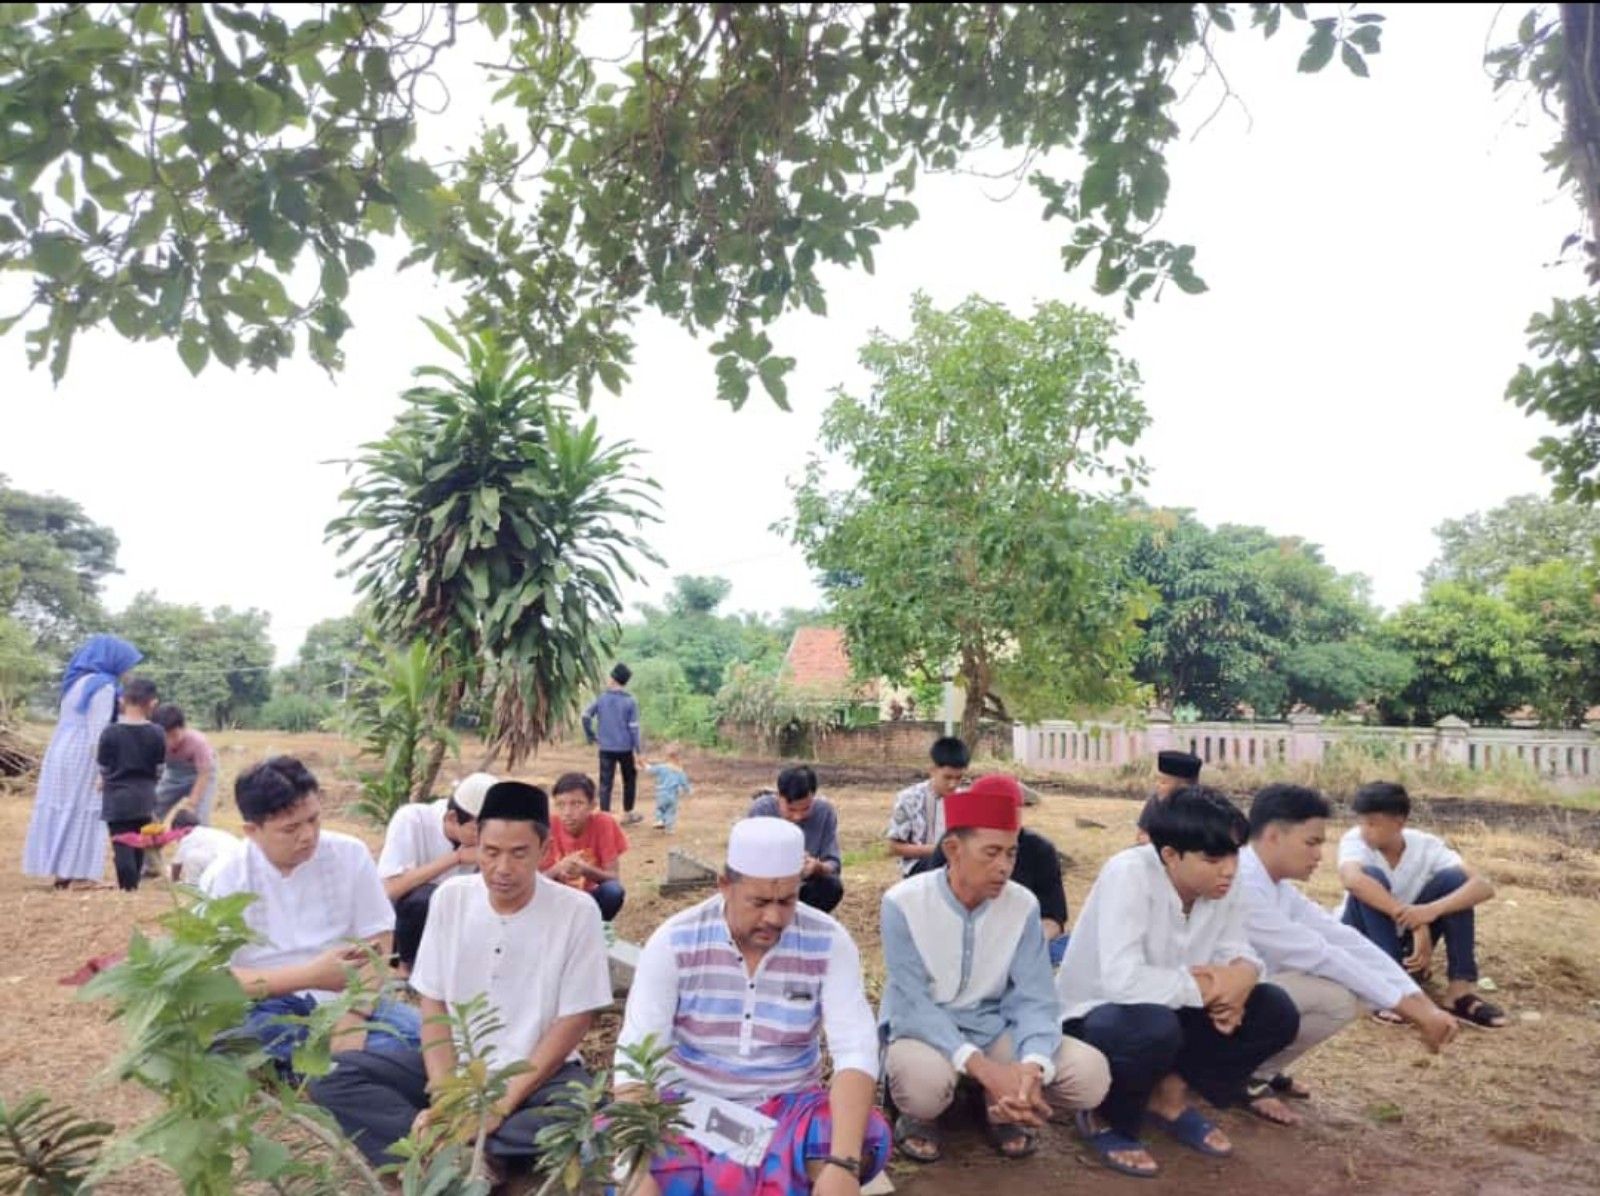 Berziarah, salah satu kegiatan tradisi munggahan/Kabar Banten/Humaeroh Alwan 